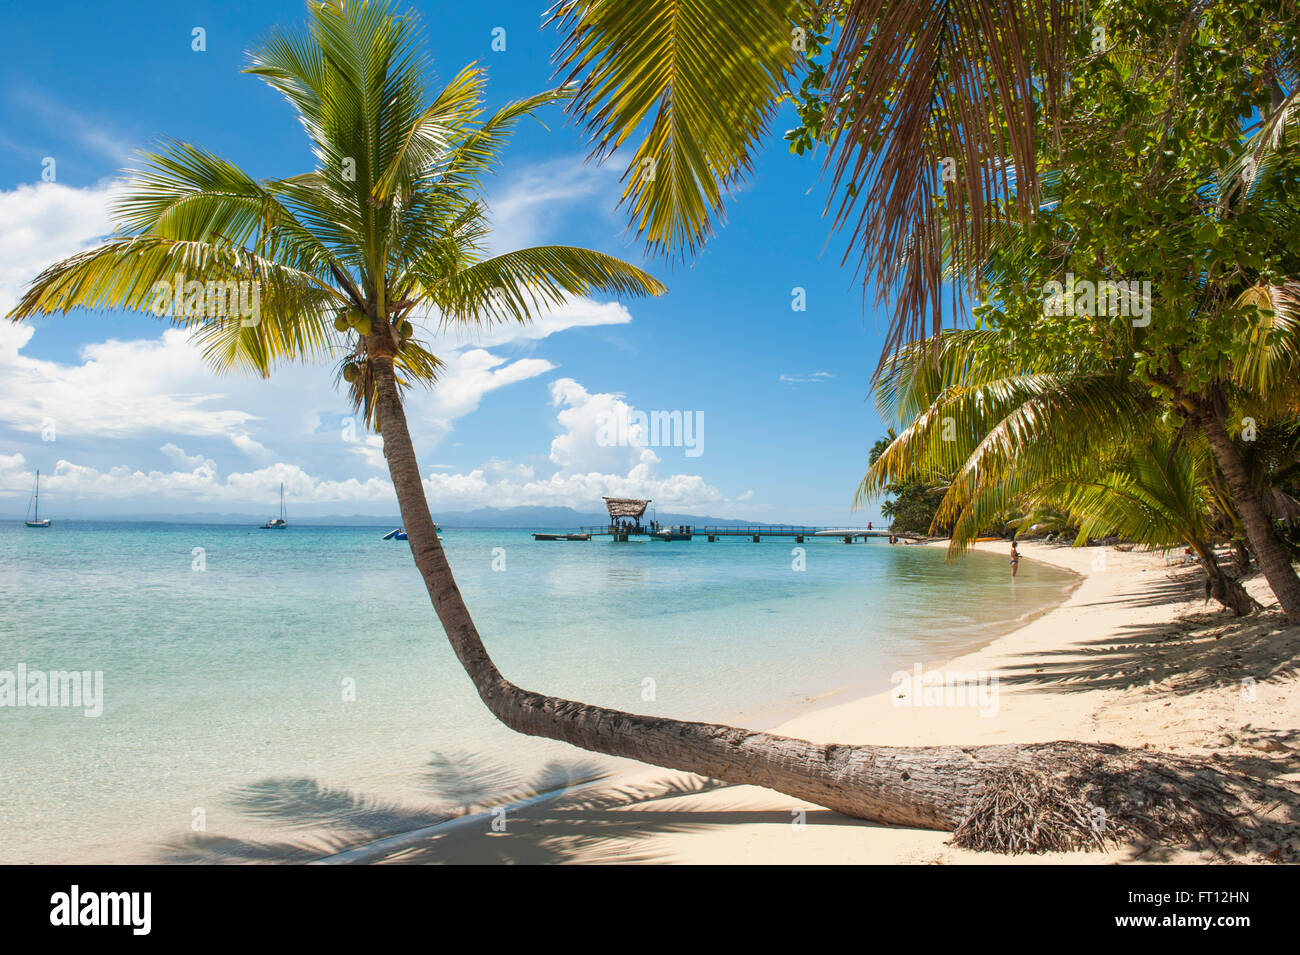 Einsame Palme an einem Strand, Leleuvia Insel Lomaiviti Inseln, Fiji, Südsee Stockfoto